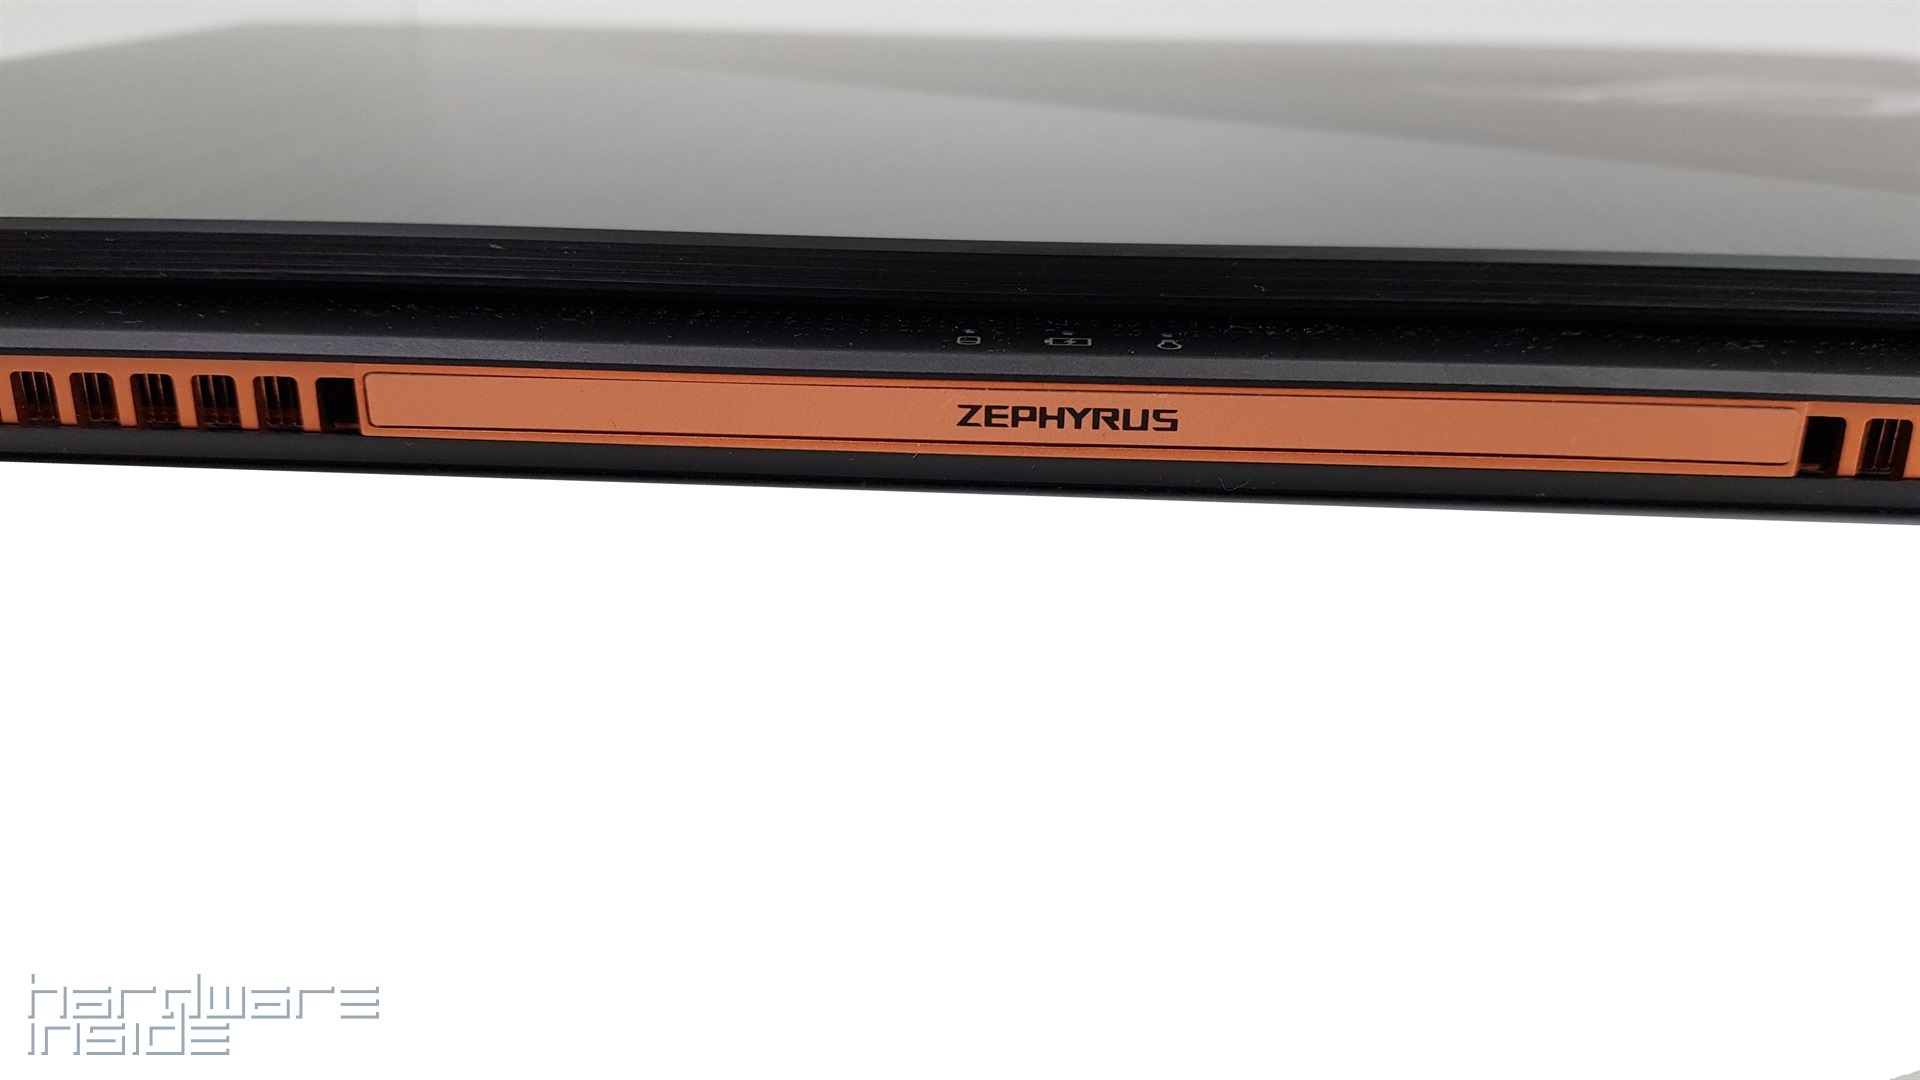 Asus ROG Zephyrus S GX701 - 21